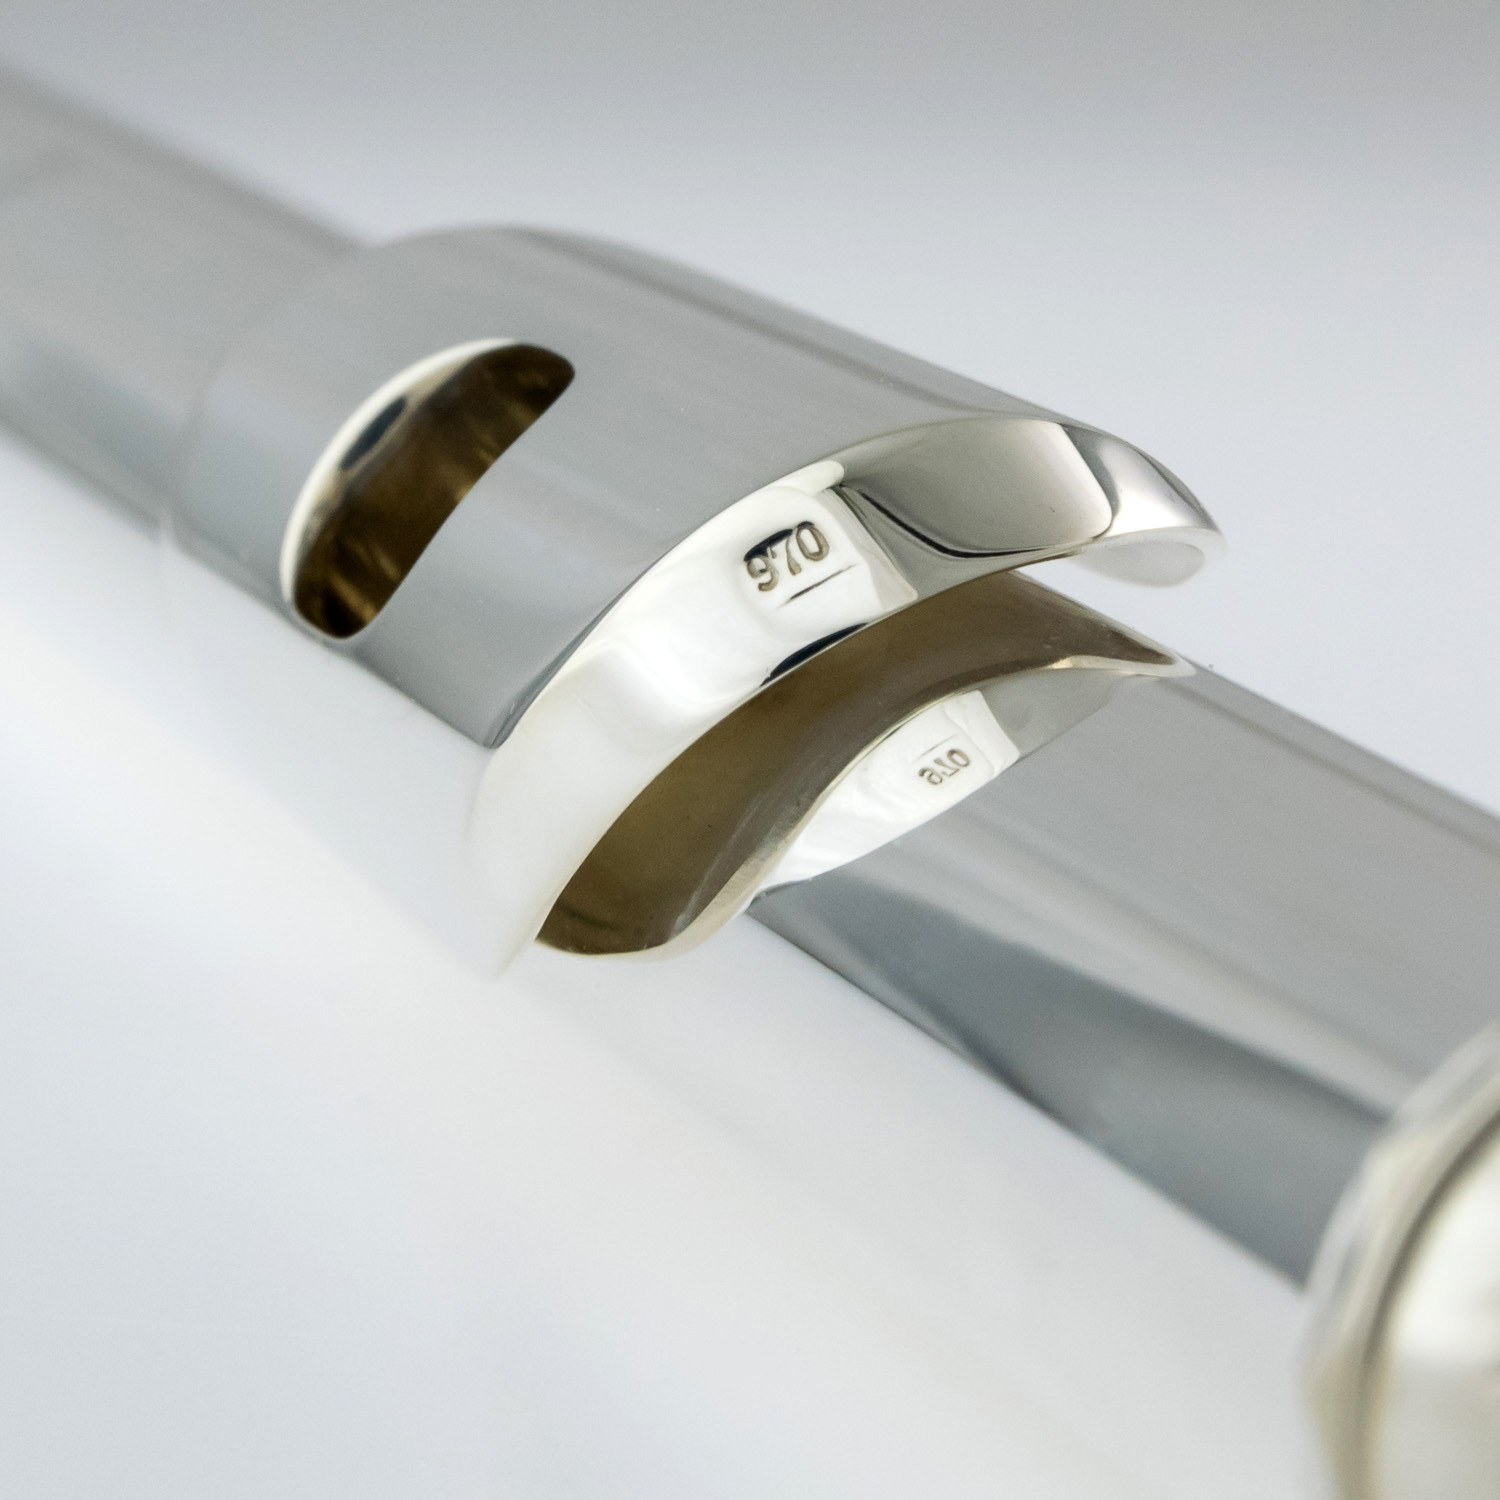 Pearl Flute Headjoint - Vivace - .970 Pristine Silver